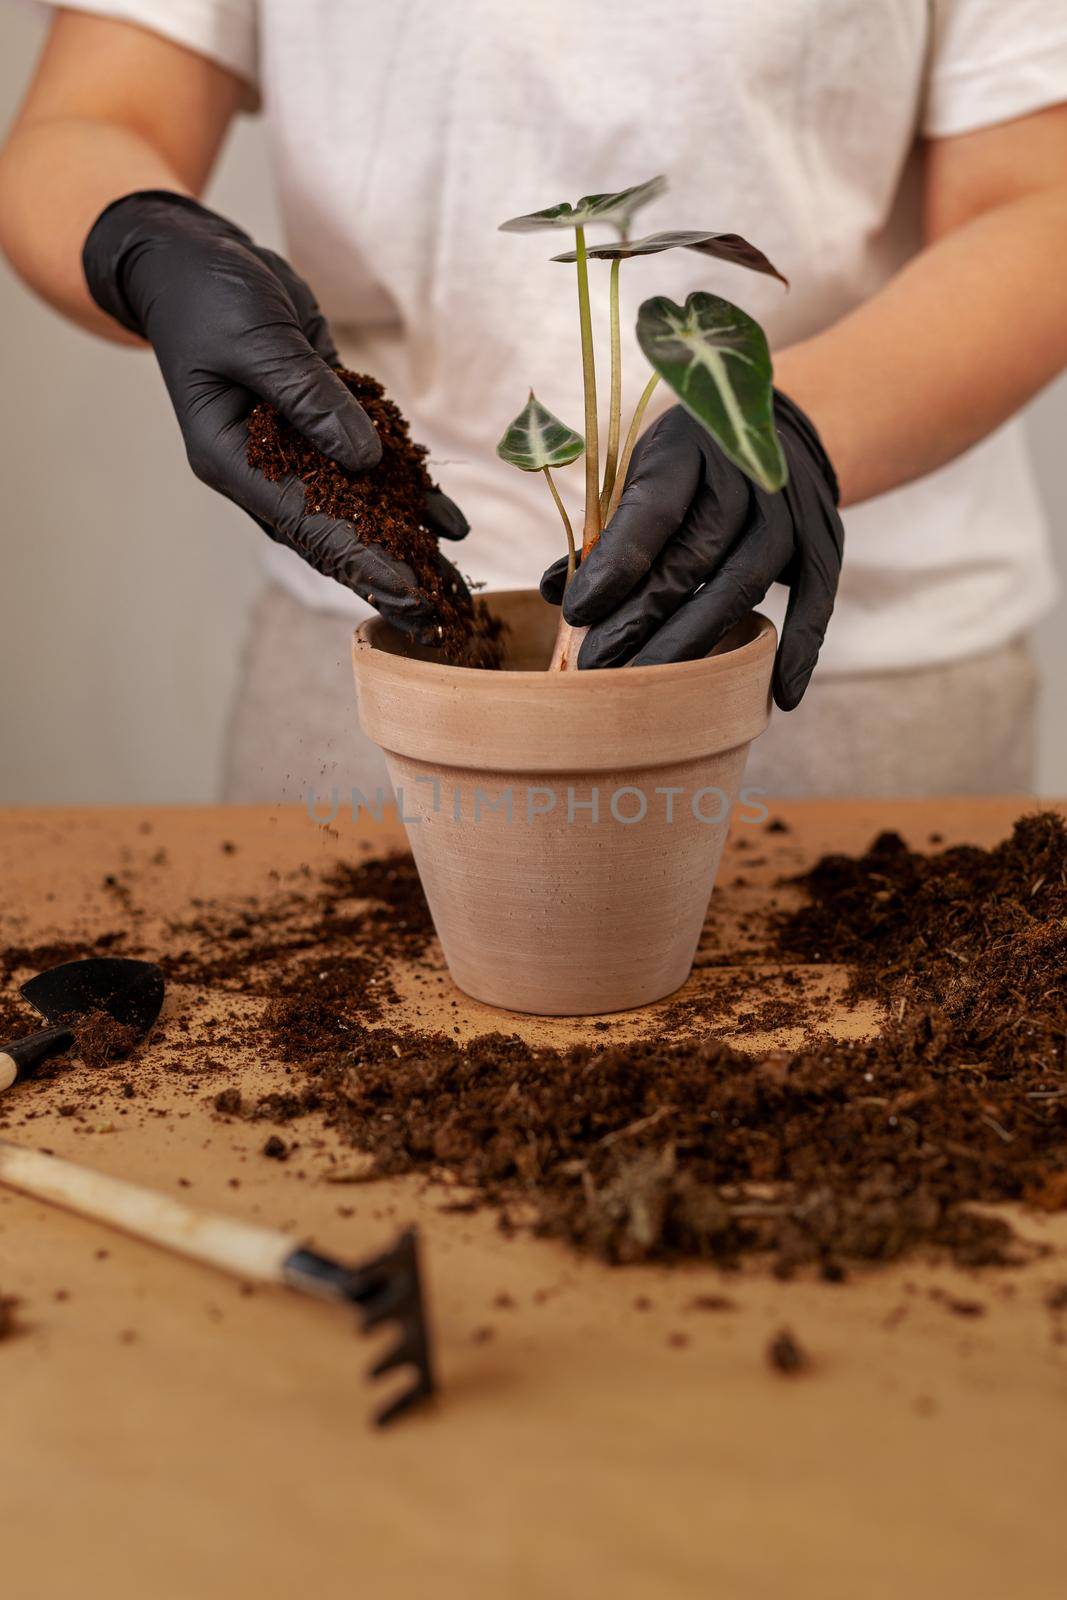 Transplanting a houseplant into a new flower pot. by igor_stramyk